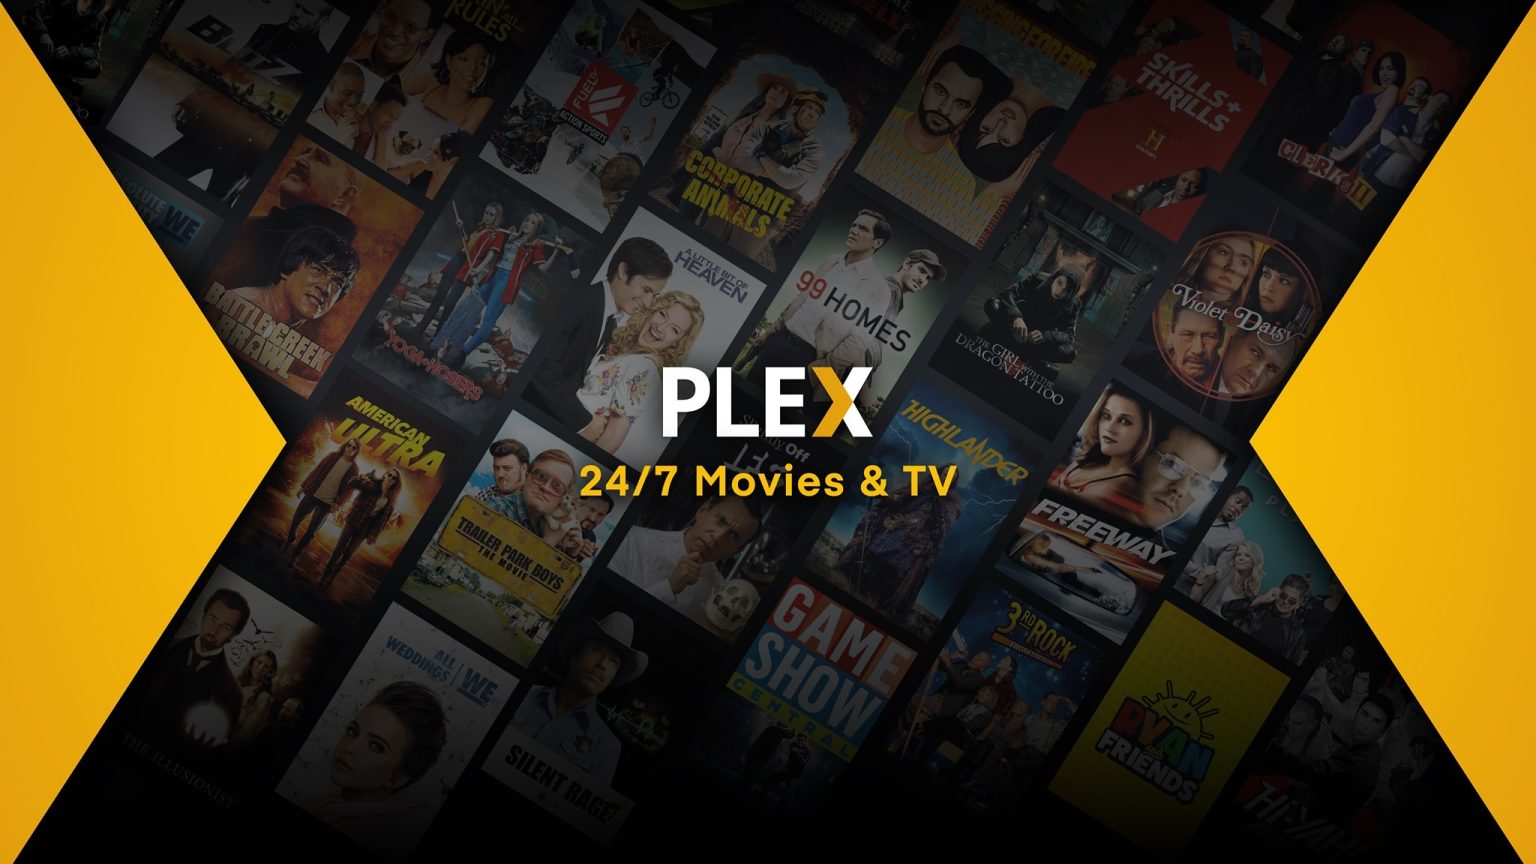 plex media server on external hard drive